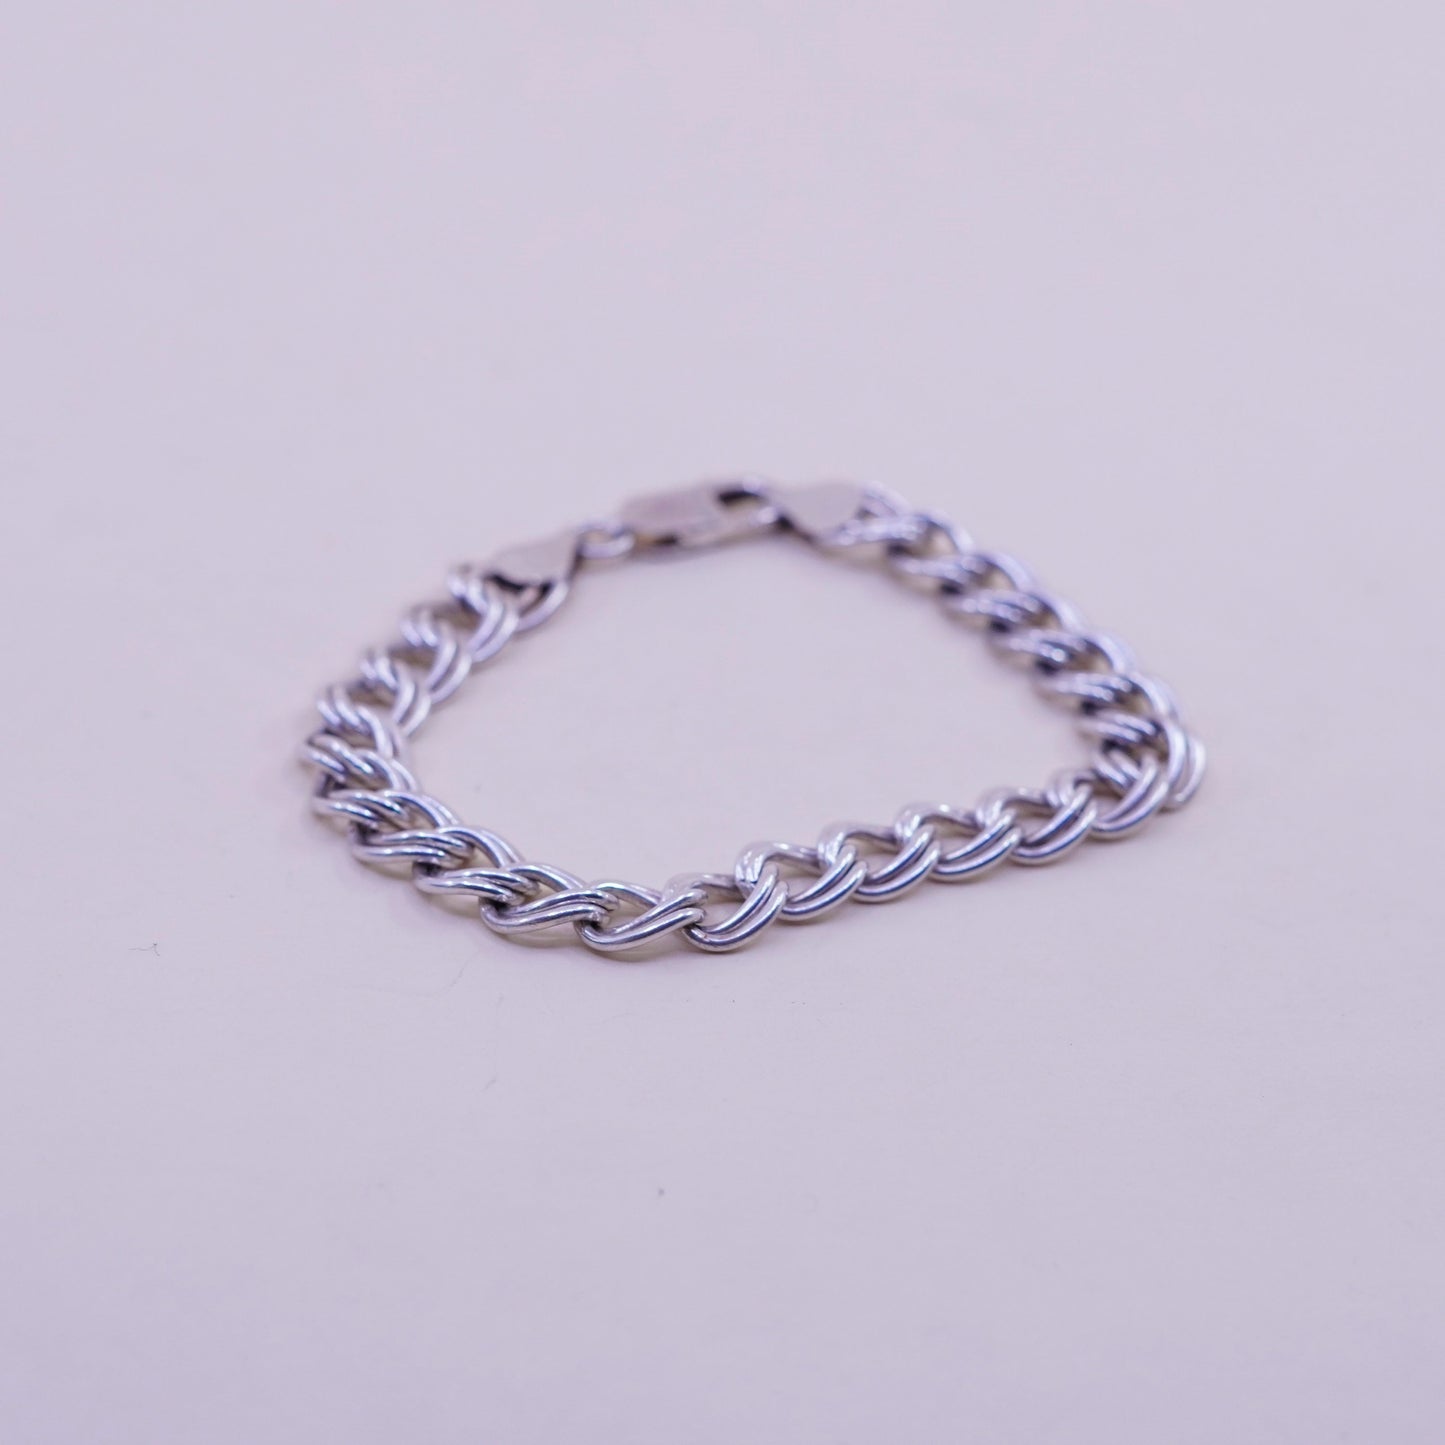 7”, 9mm, Vintage sterling silver double curb bracelet, 925 chain